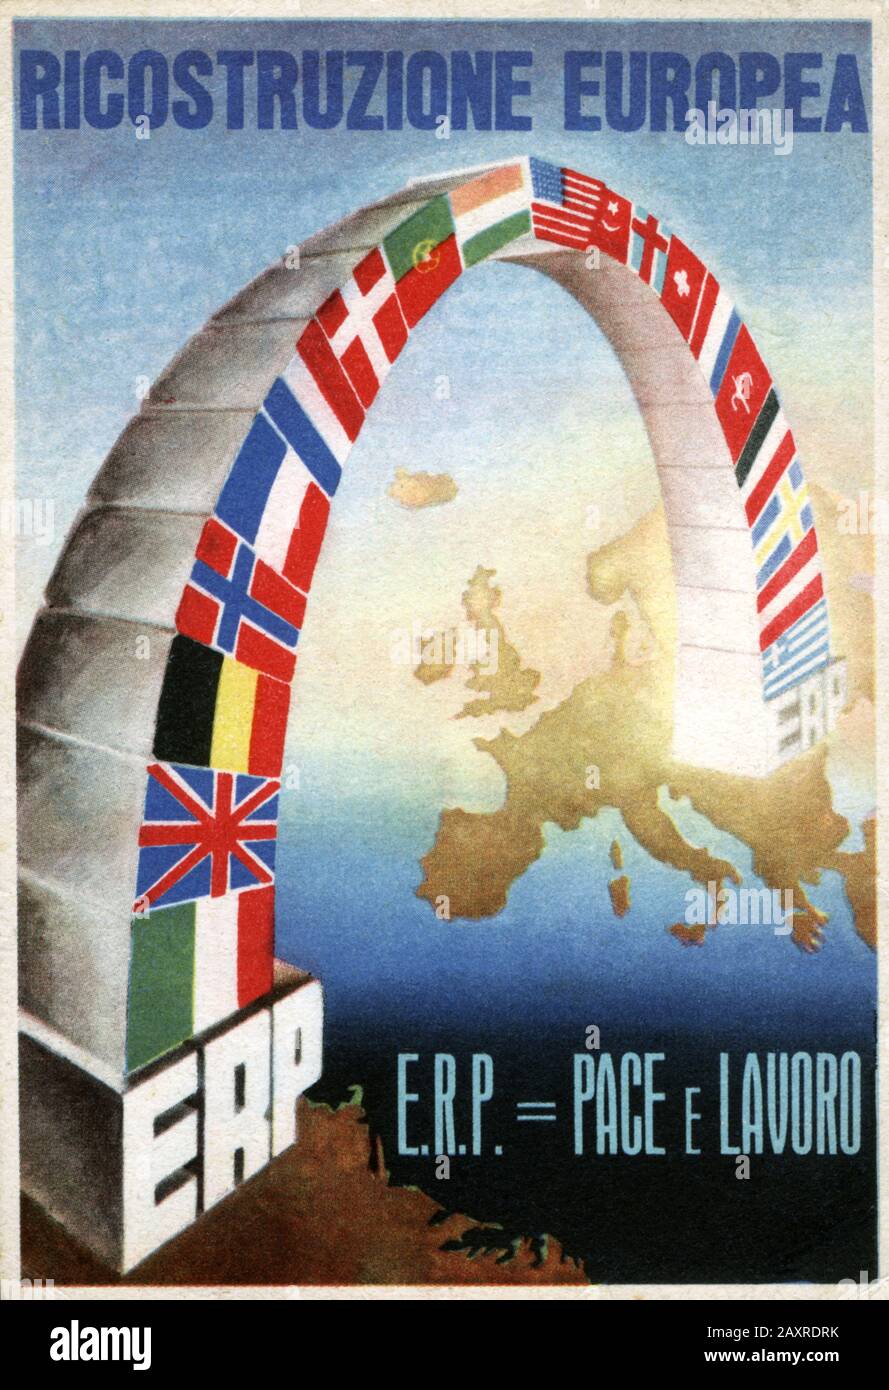 1949 , ITALY : Italian postcard Post War European Recovery Program  propaganda : " RICOSTRUZIONE EUROPEA E.R.P = PACE E LAVORO " for the PIANO  MARSHALL ( Marshall Plane ). The Marshall